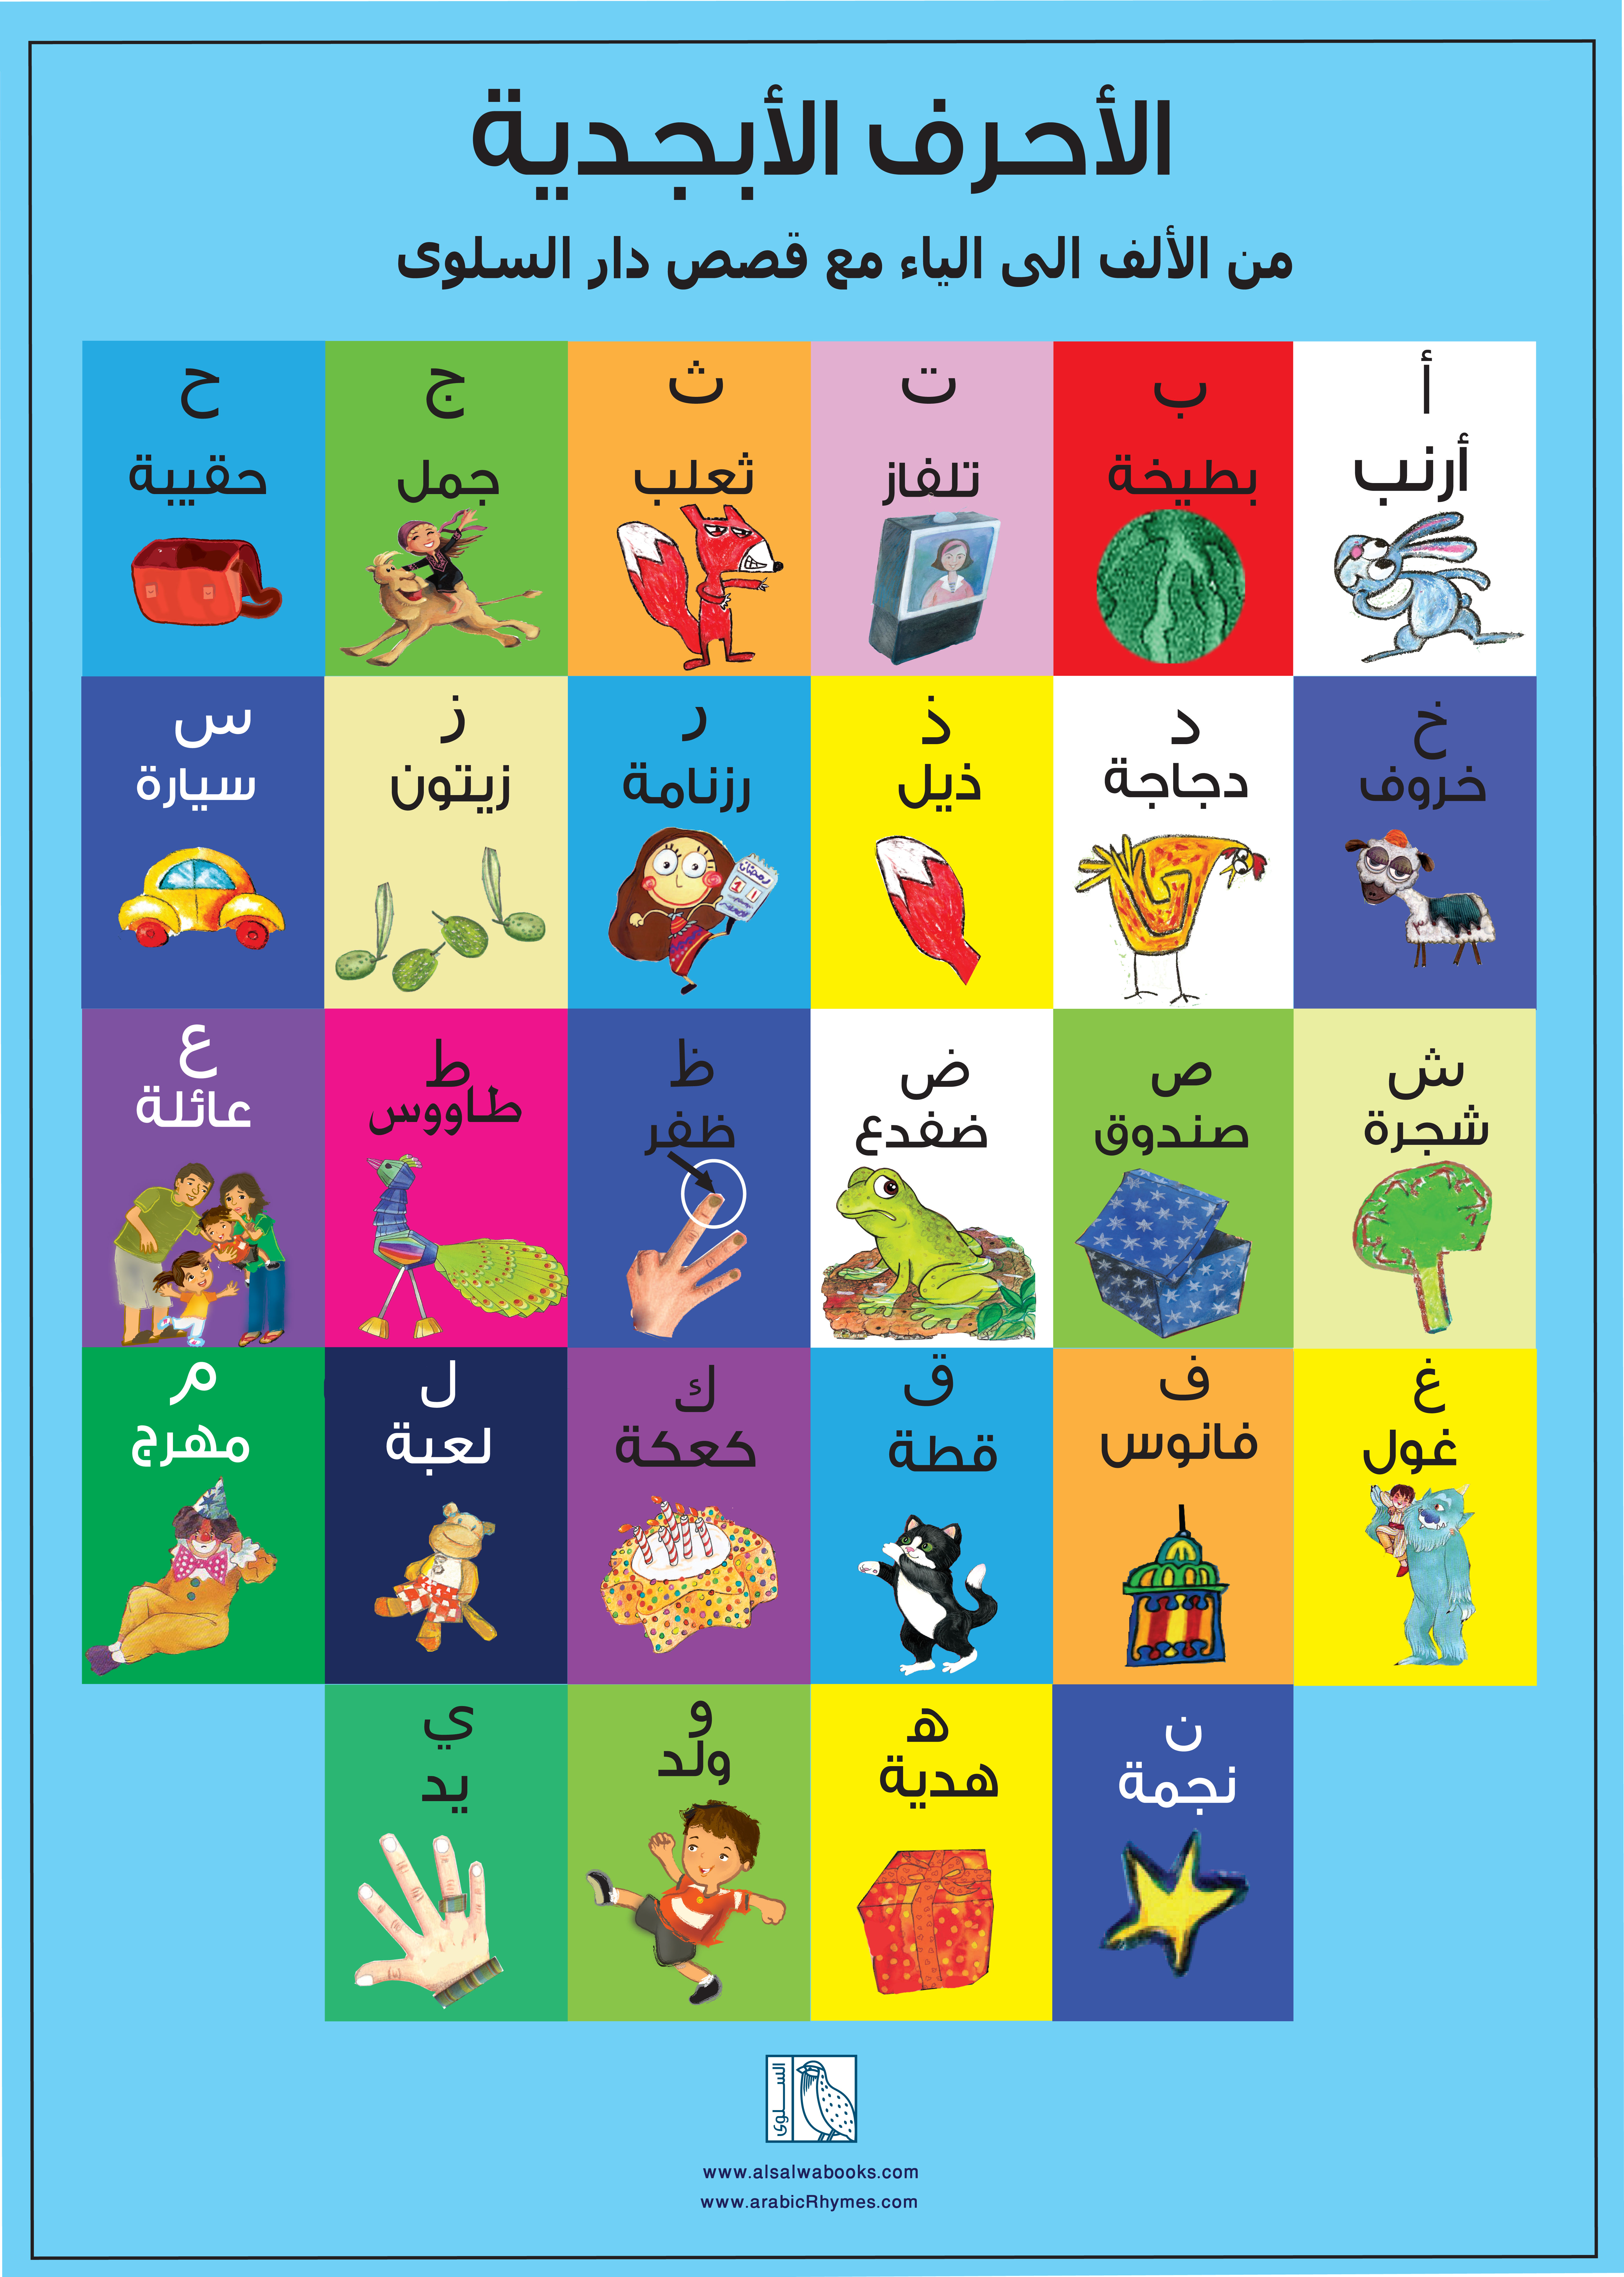 Free Arabic Alphabet Cliparts, Download Free Clip Art ...